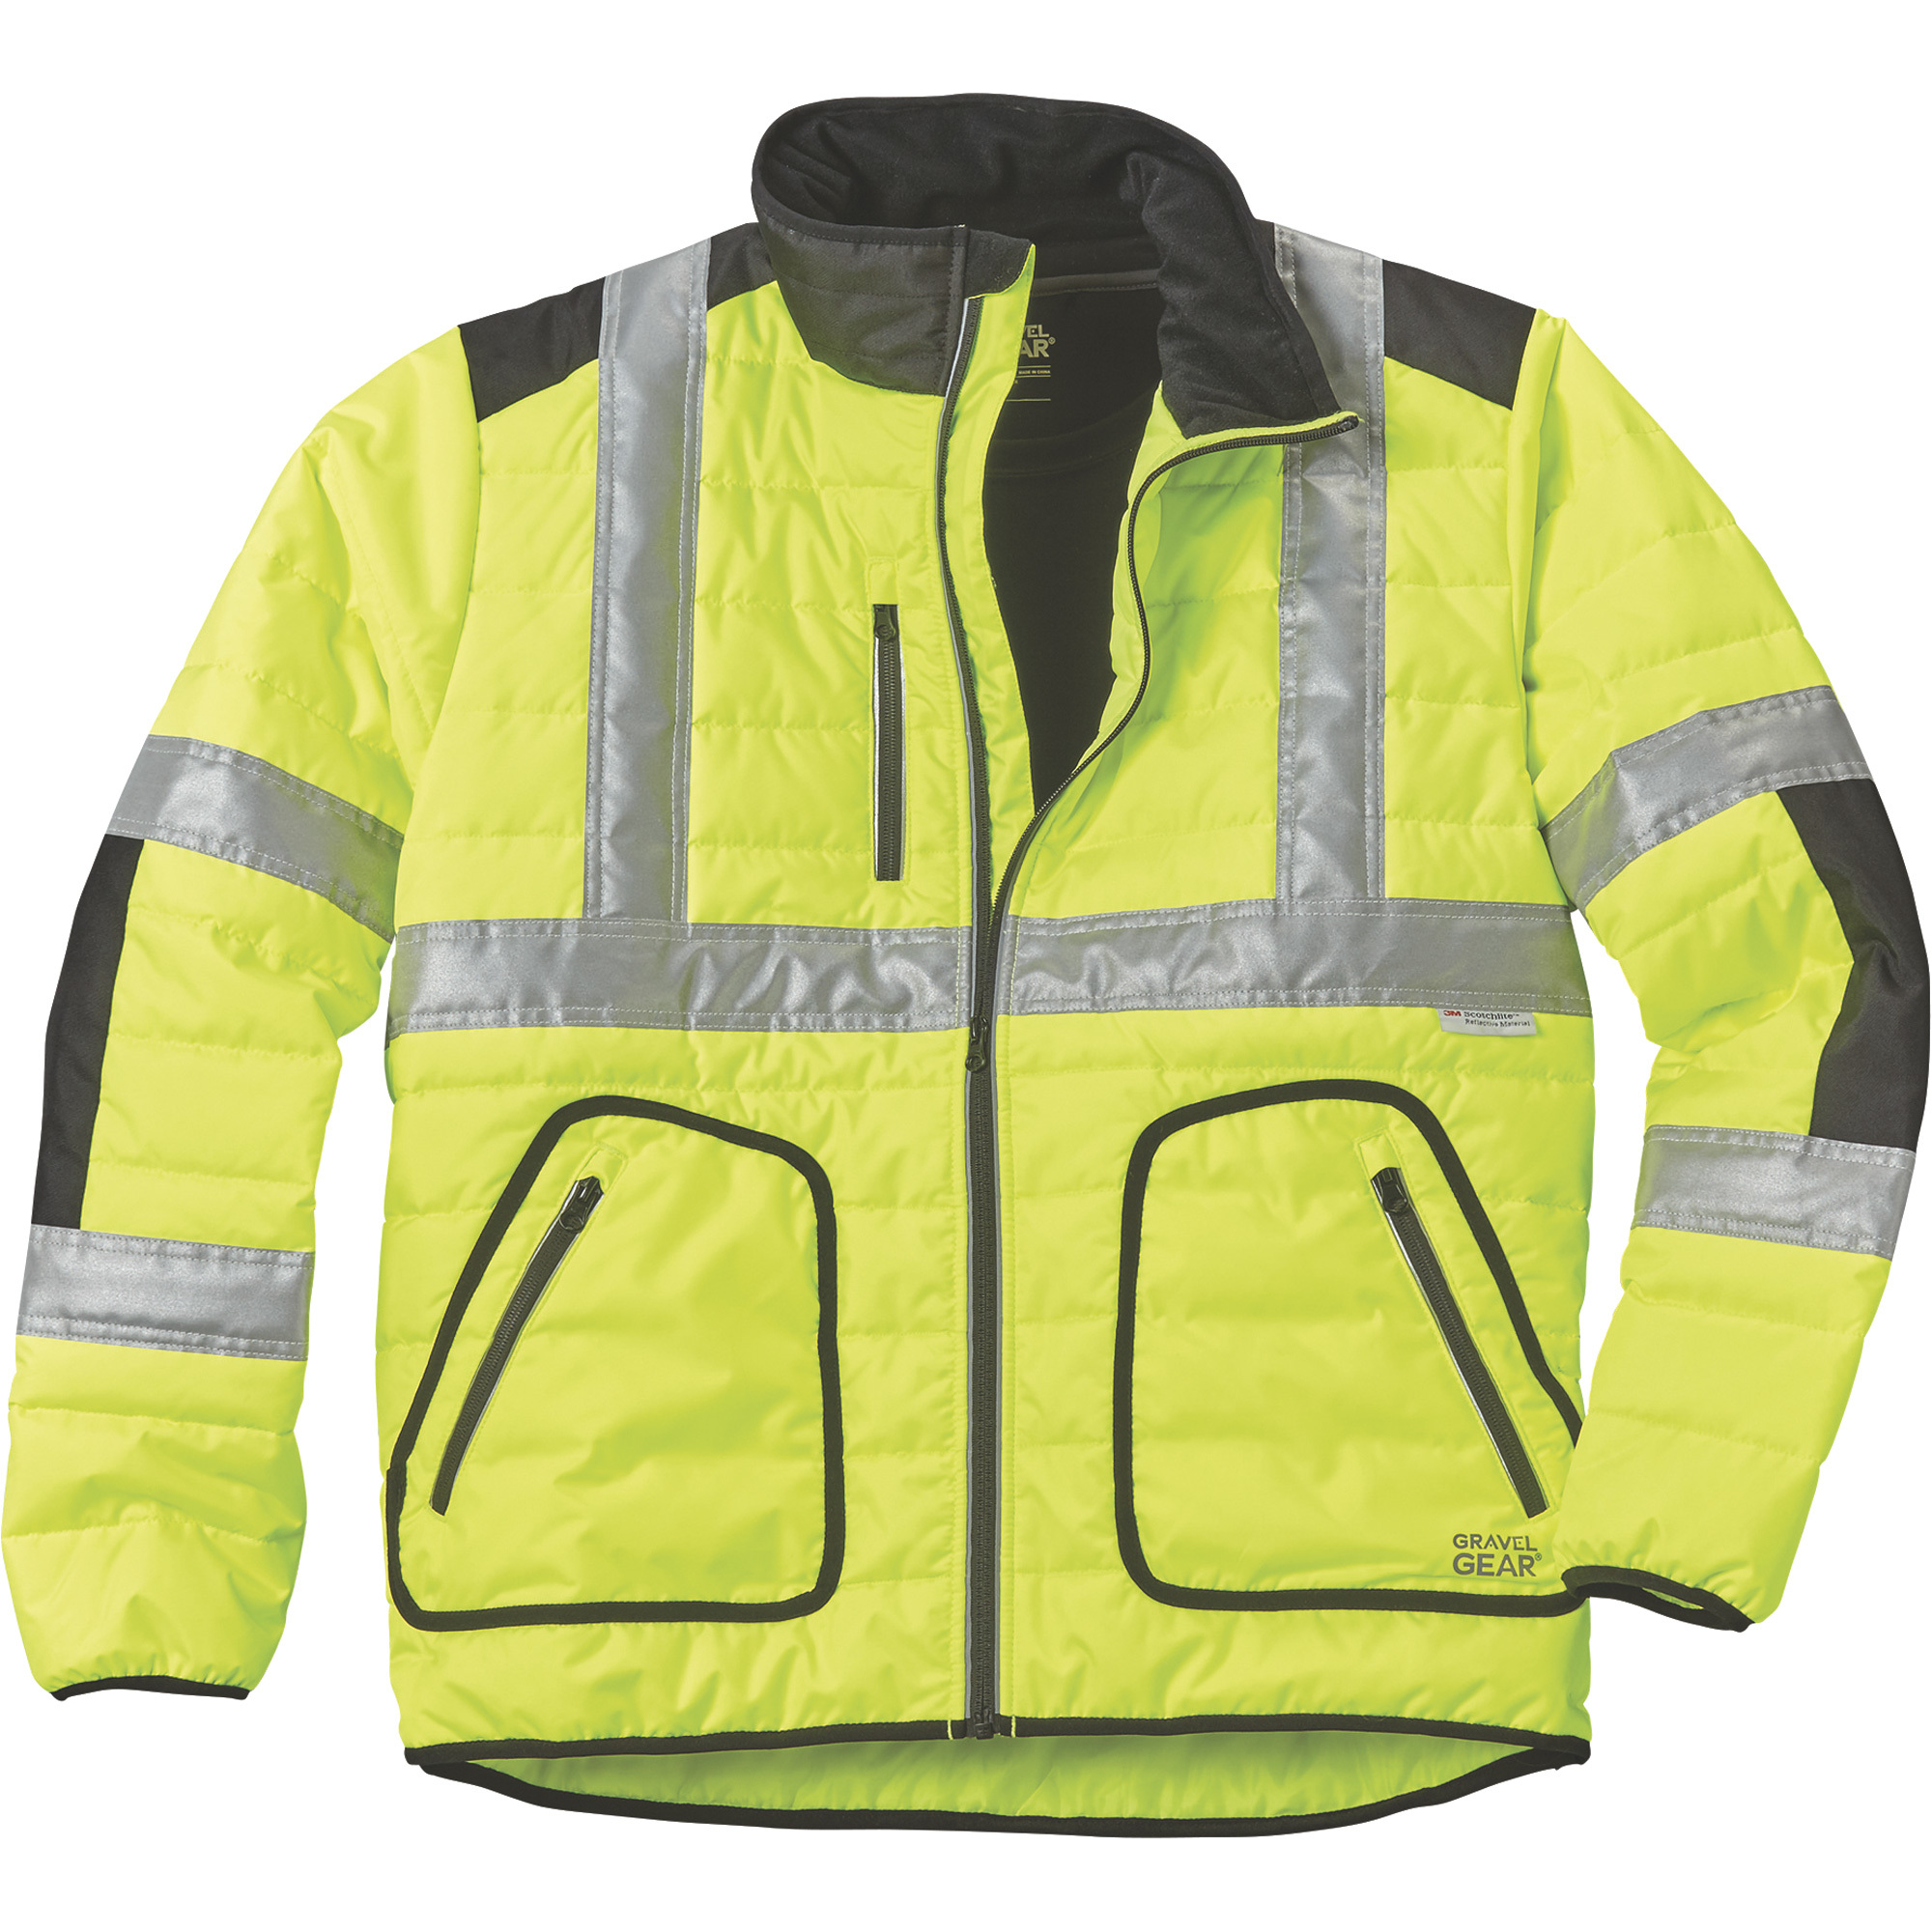 Gravel Gear Menâs Class 3 High Visibility Quilted Jacket with 3M Reflective Tape â Lime, XL